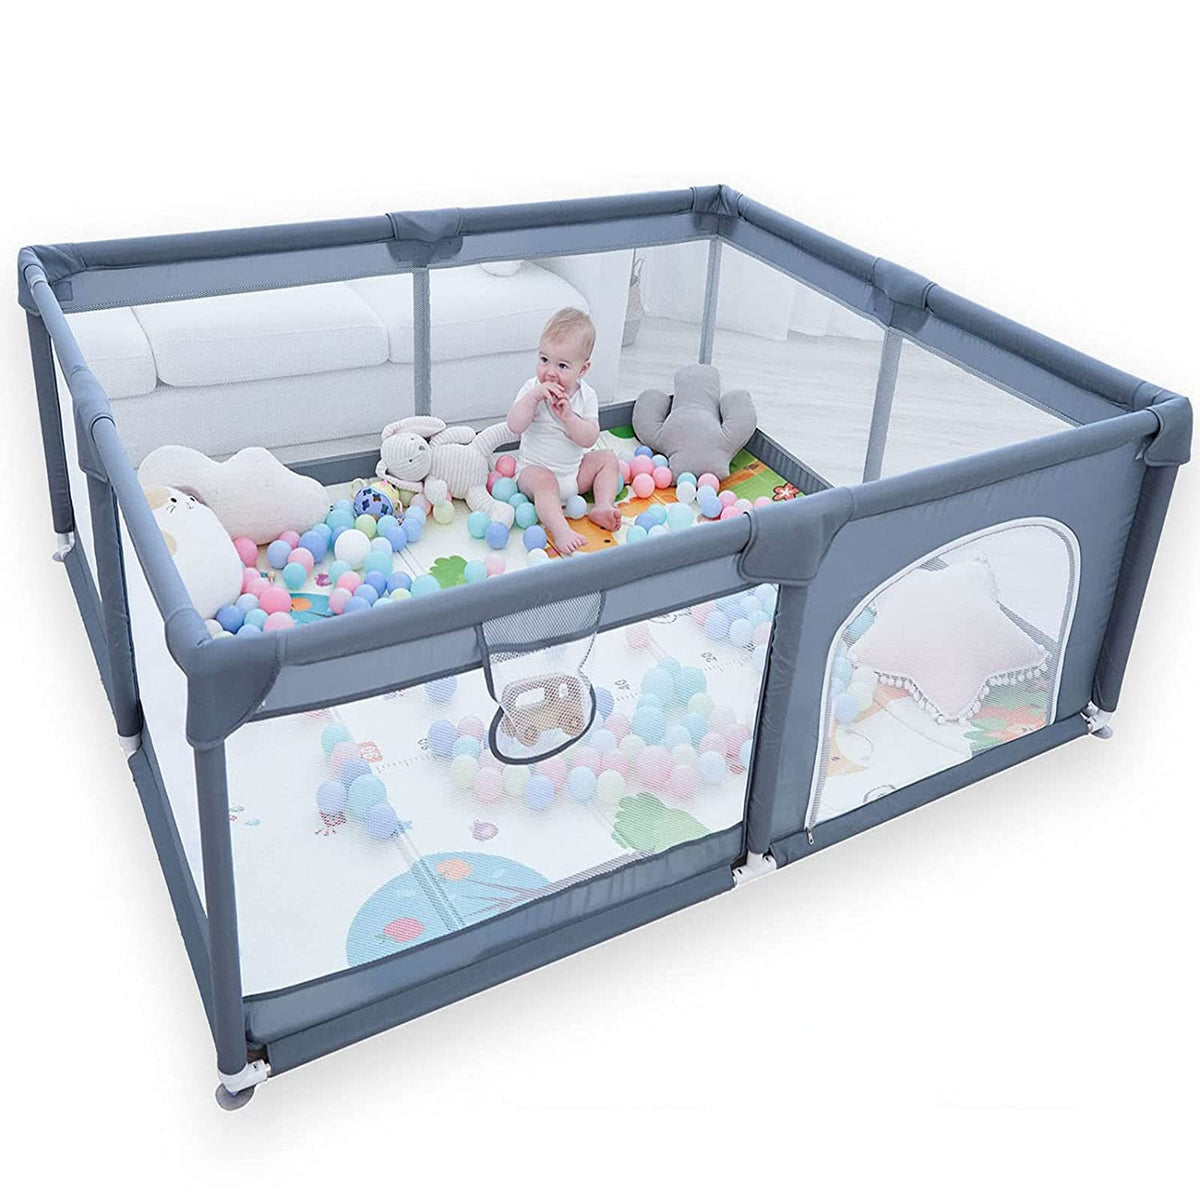 Foldable & Portable Fabric Baby Playpen 180x150x68cm-Grey